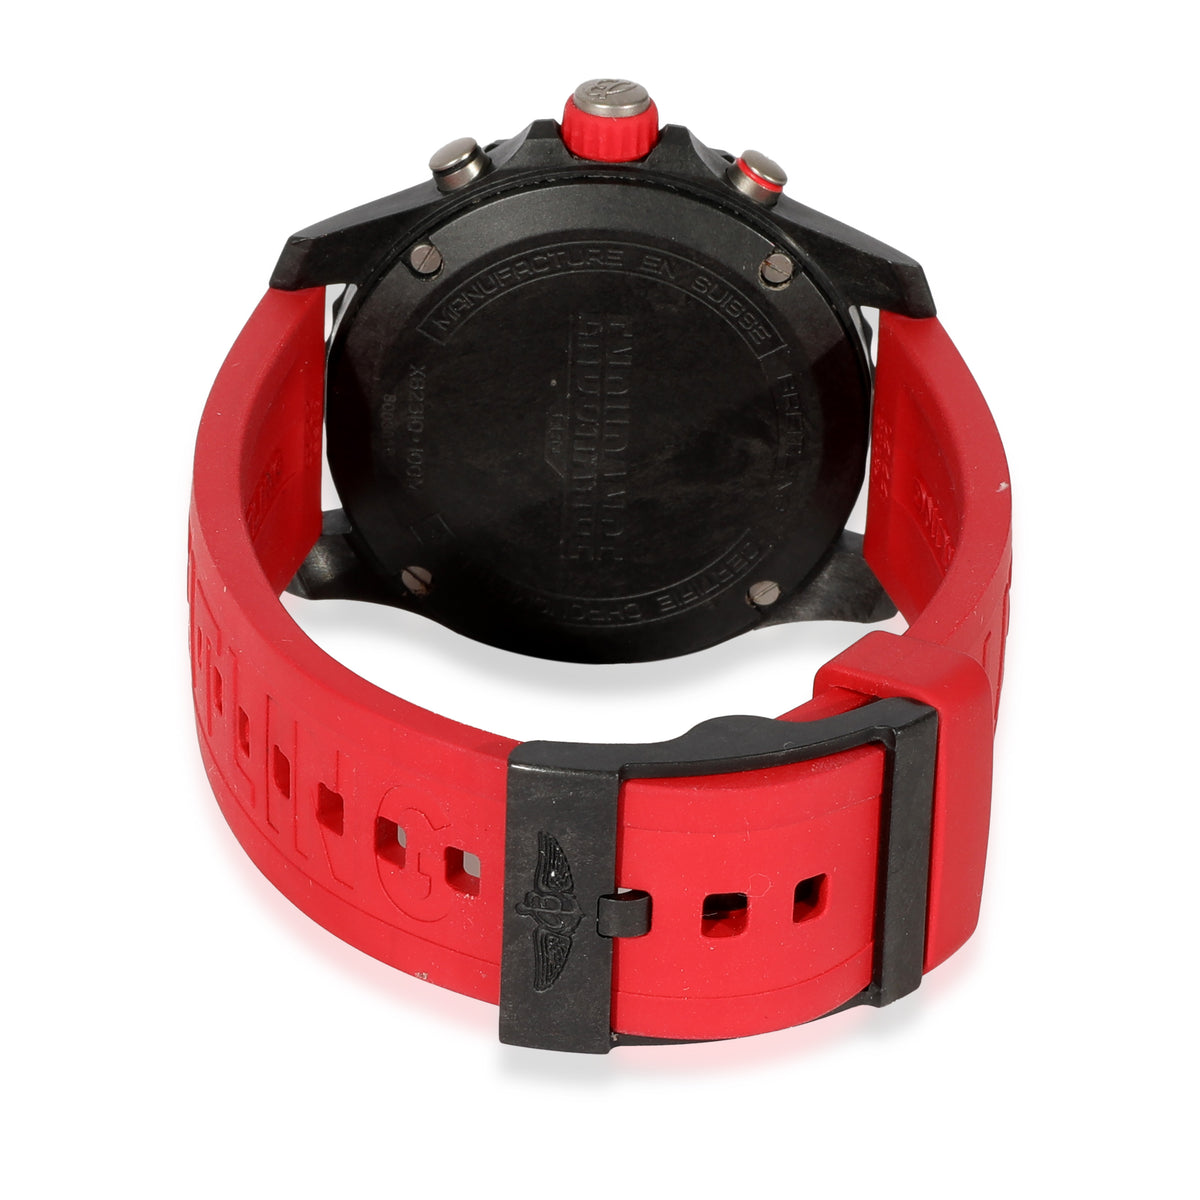 Breitling Endurance Pro X82310 Men's Watch in  Polymer